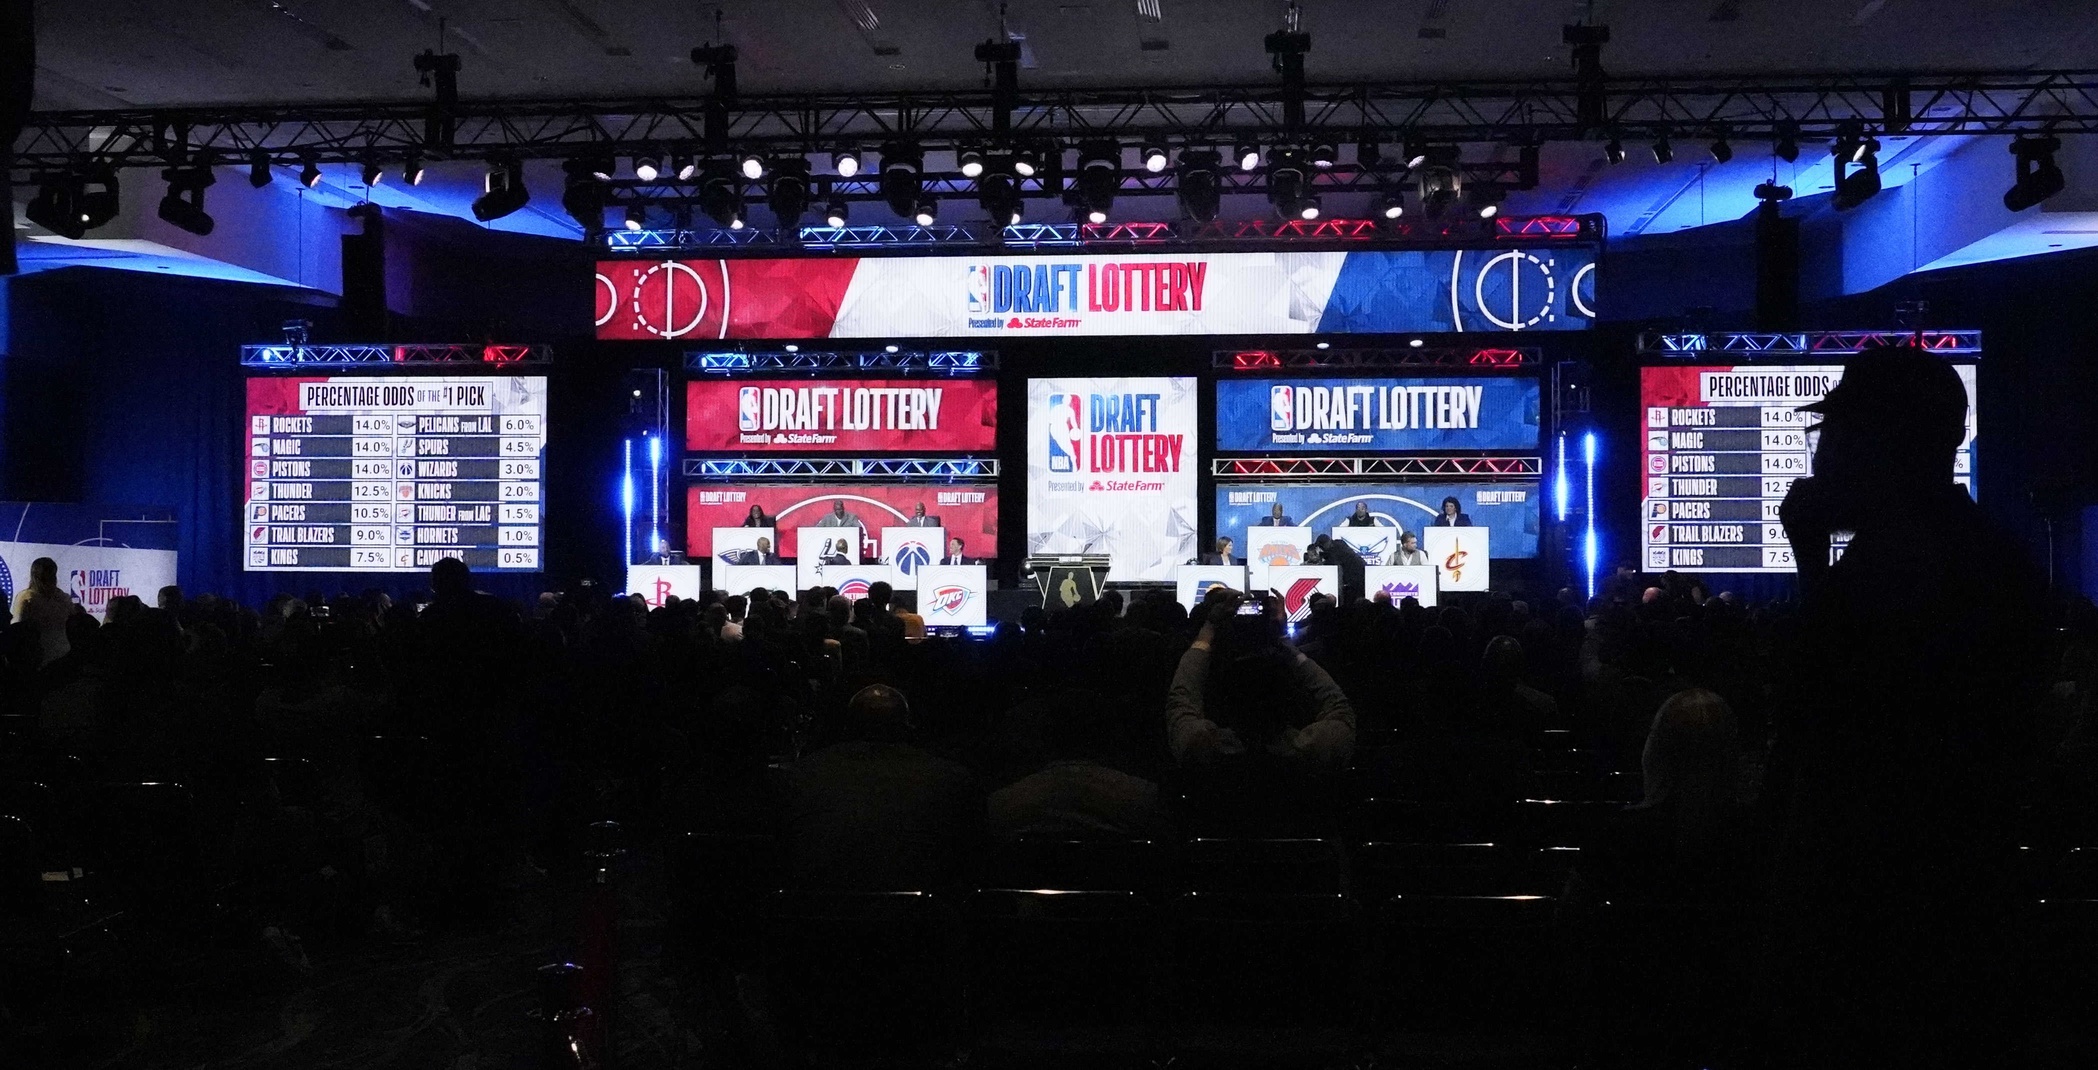 NBA Draft Lottery board